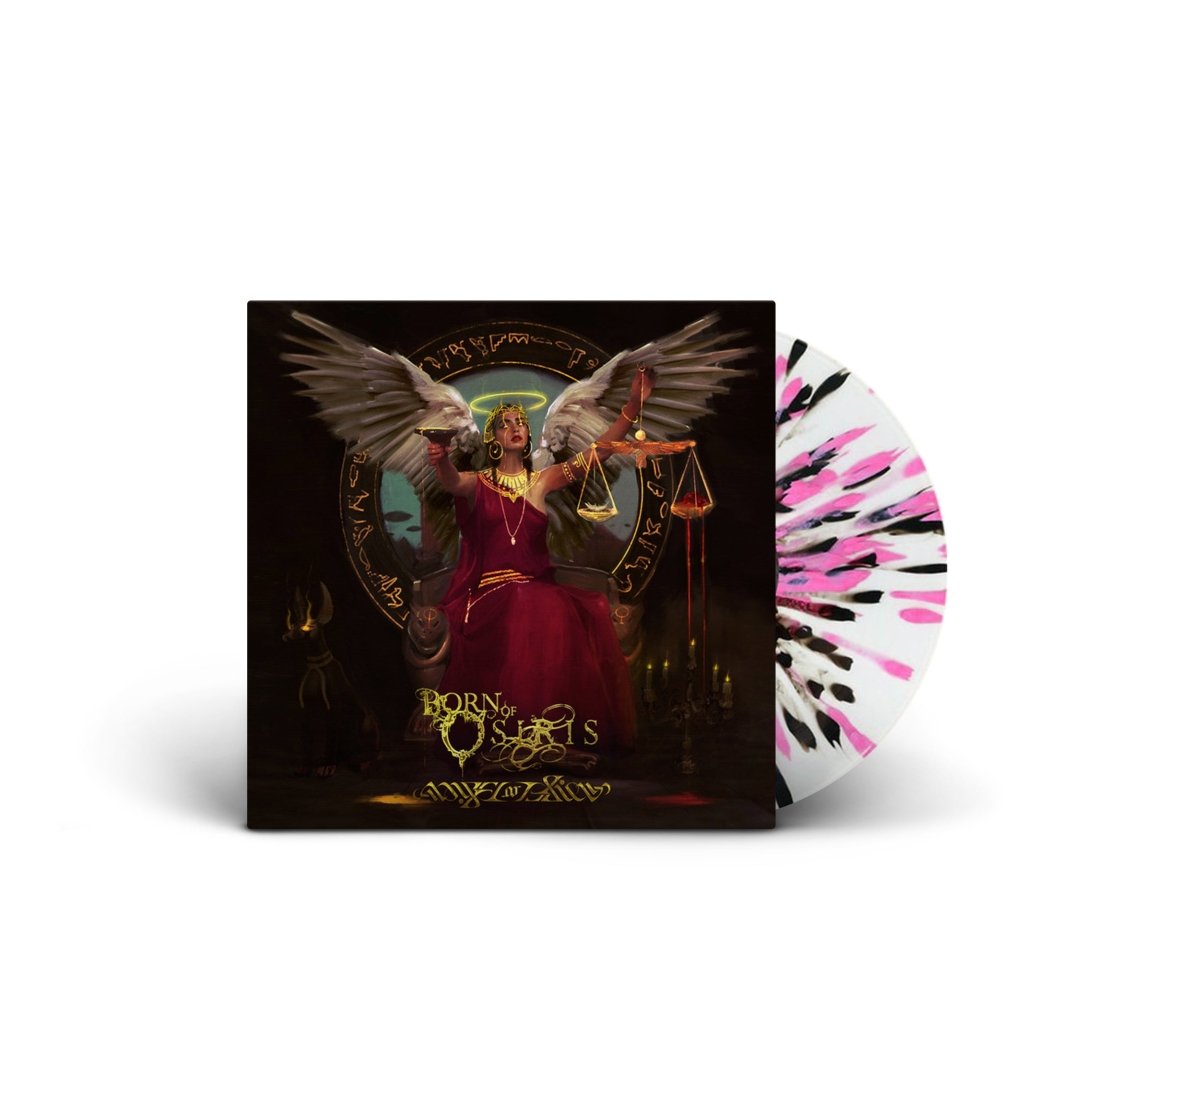 Born Of Osiris - Angel Or Alien Vinyl